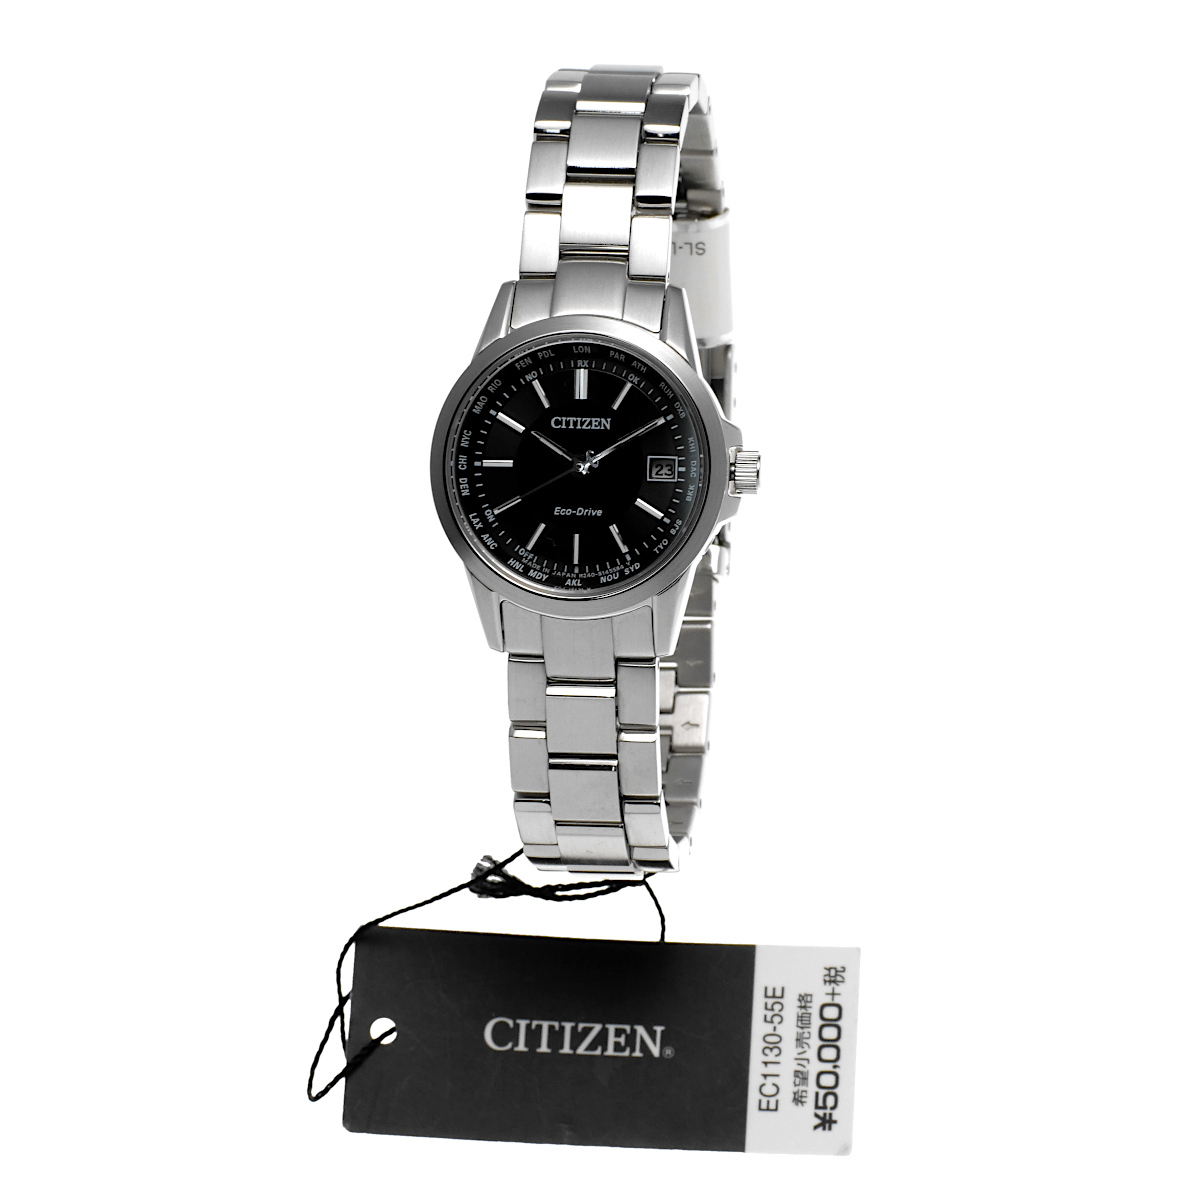 CITIZEN Citizen Eko-Drive black face stainless steel / solar / electro-magnetic wave clock EC1130-55E lady's as good as new [. shop pawnshop W0283]